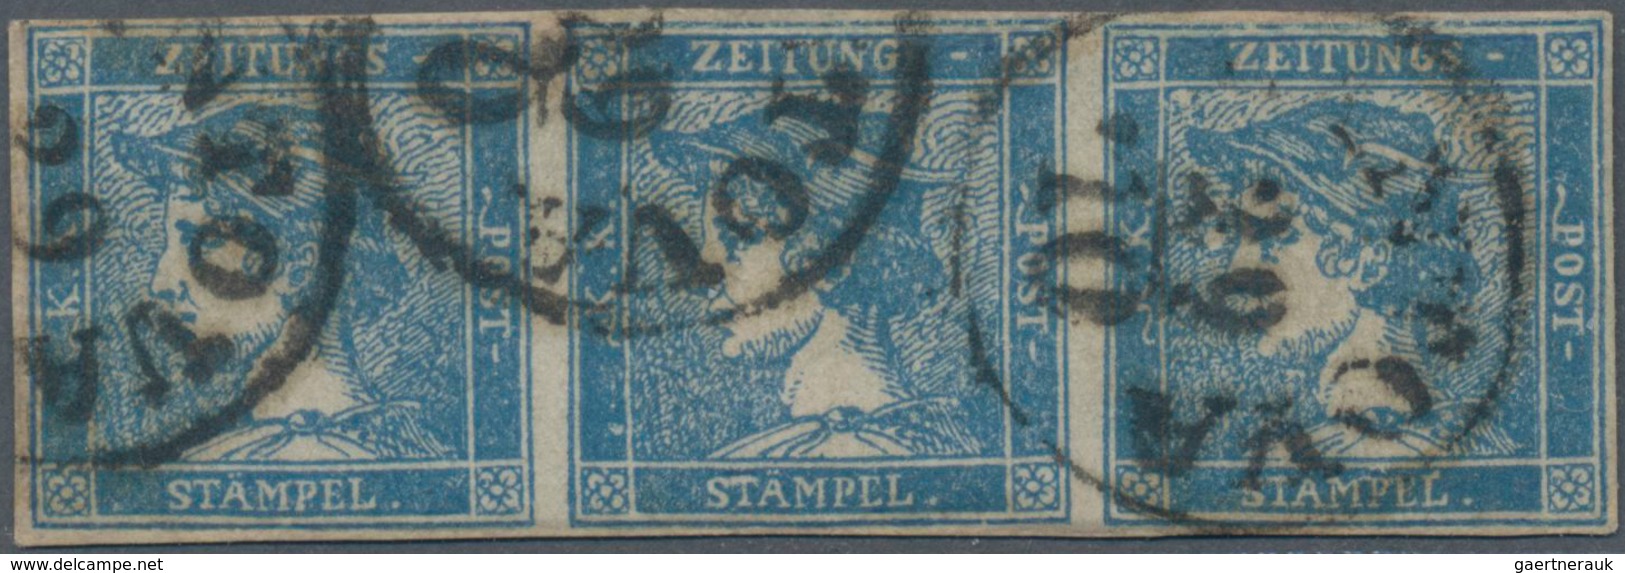 Österreich - Lombardei Und Venetien - Zeitungsmarken: 1850, Blauer Merkur Im Waagerechten 3er-Streif - Lombardo-Venetien